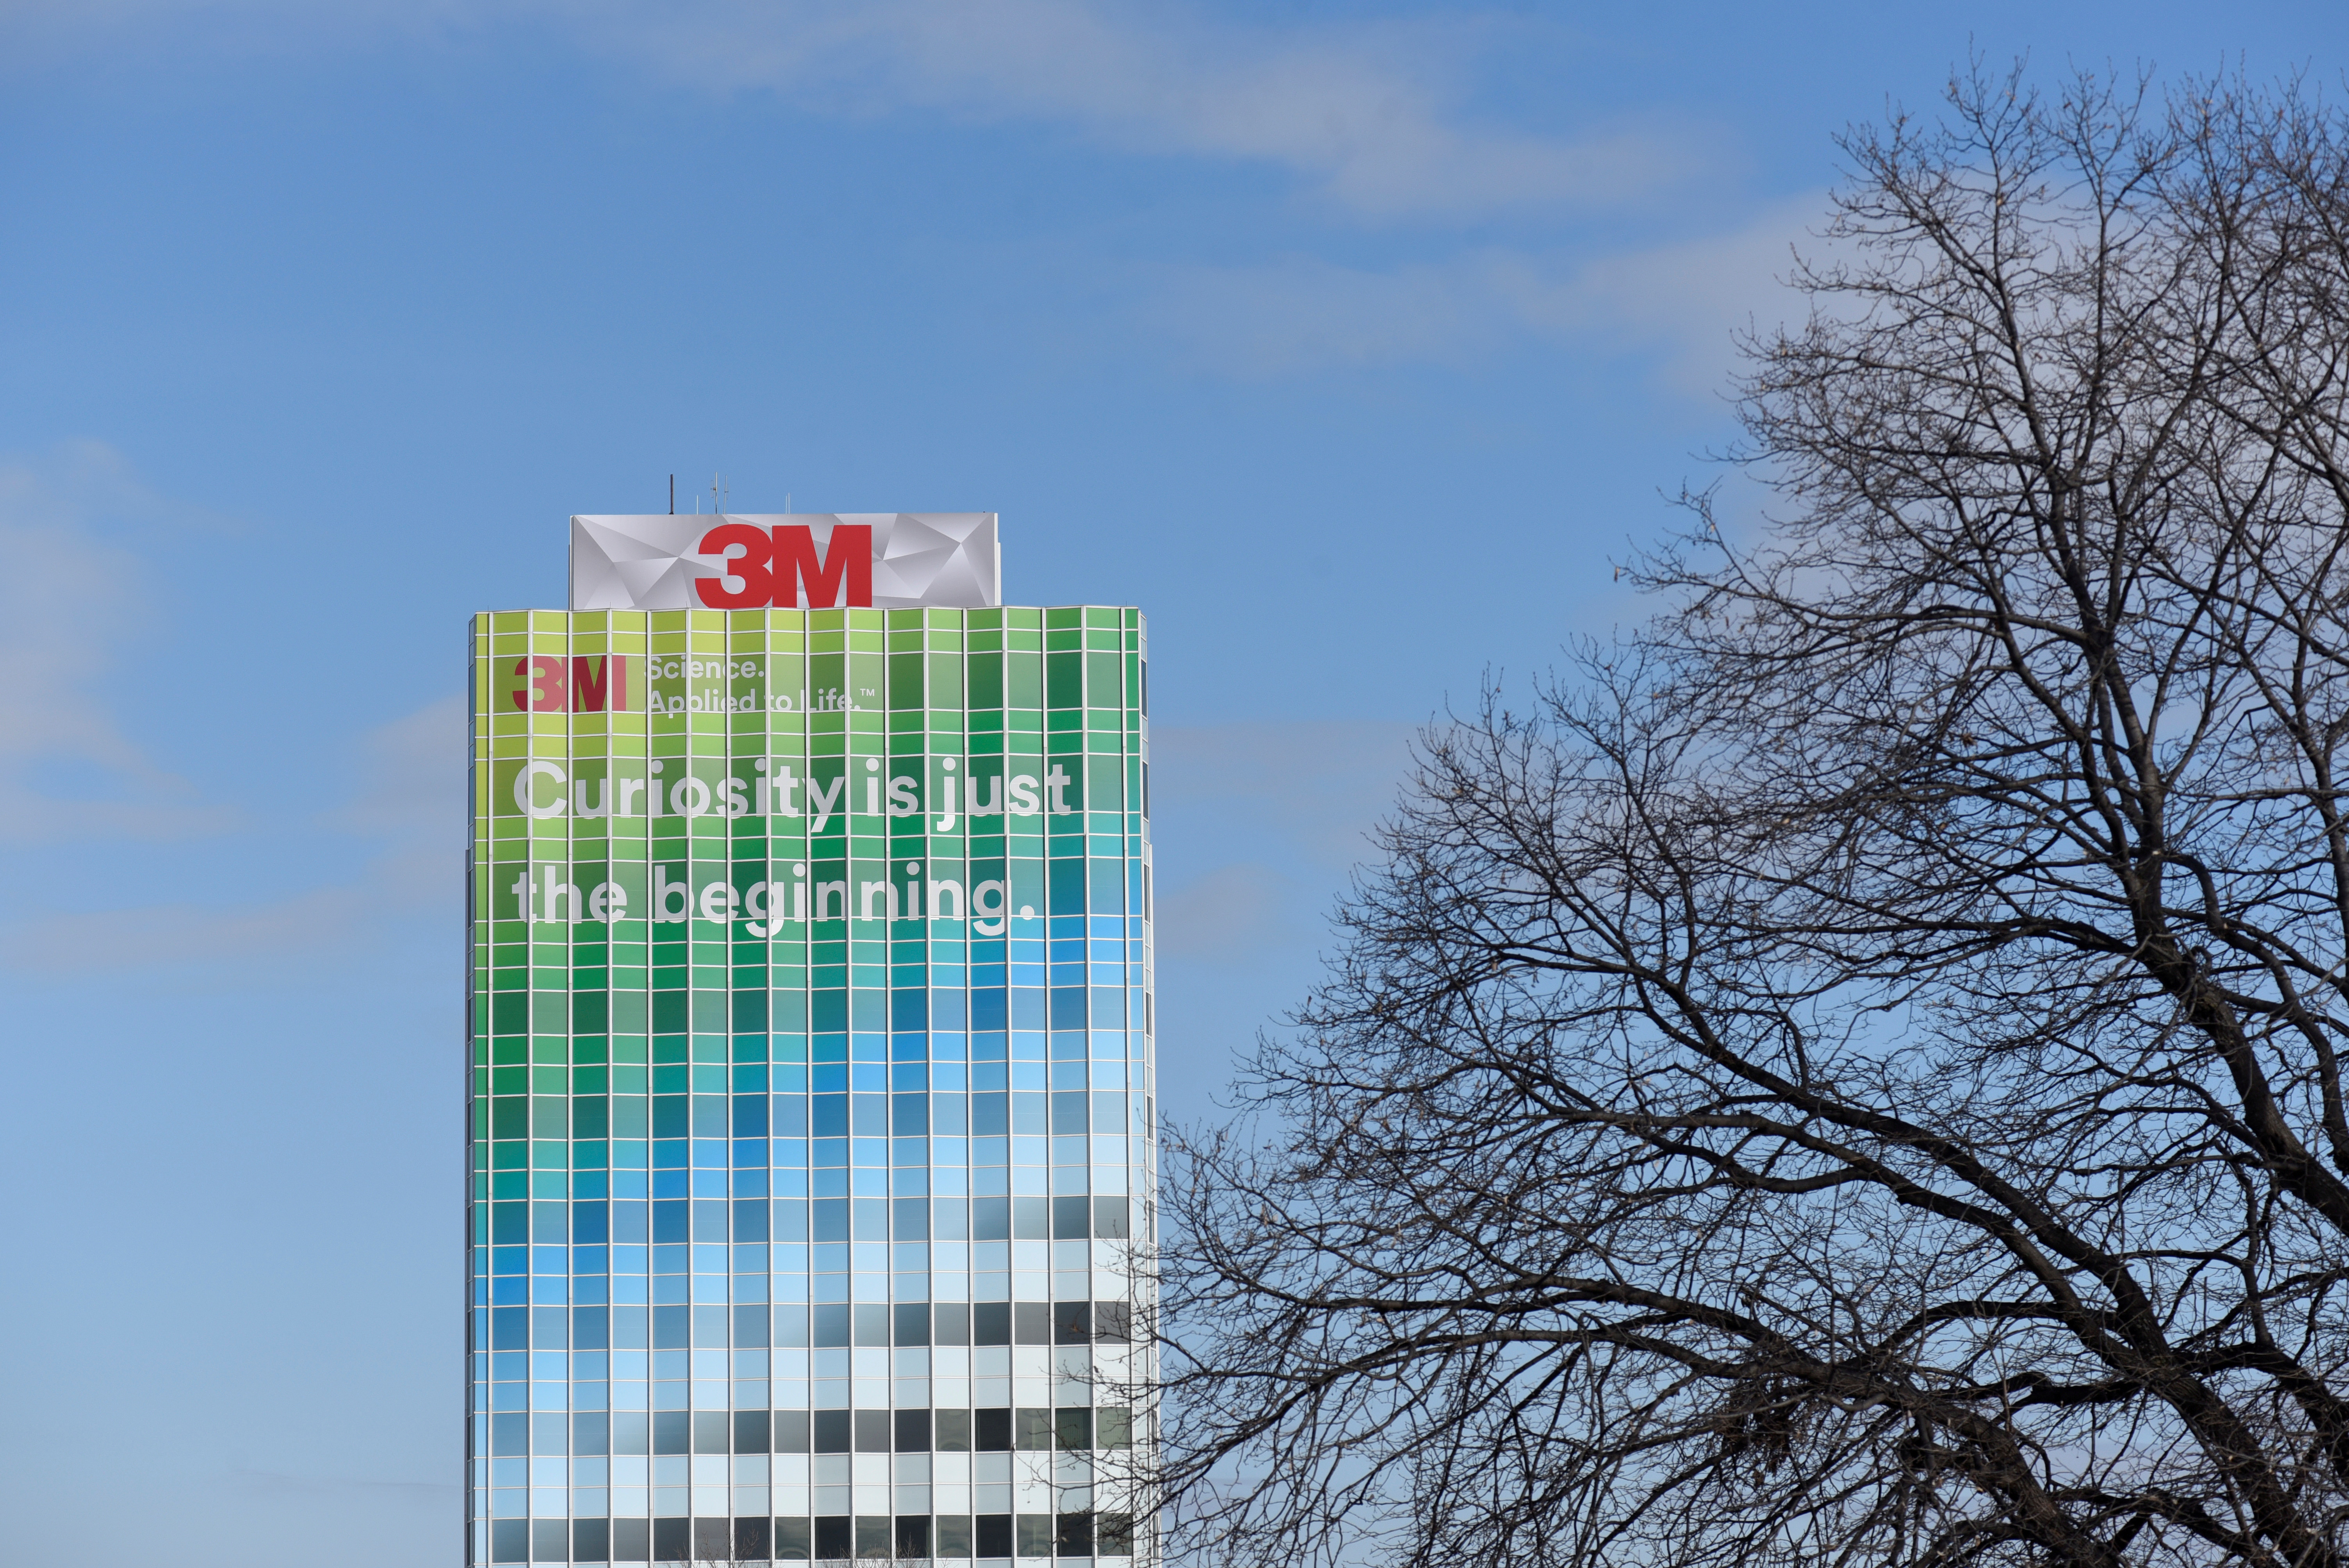 The 3M Global Headquarters in Maplewood, Minnesota